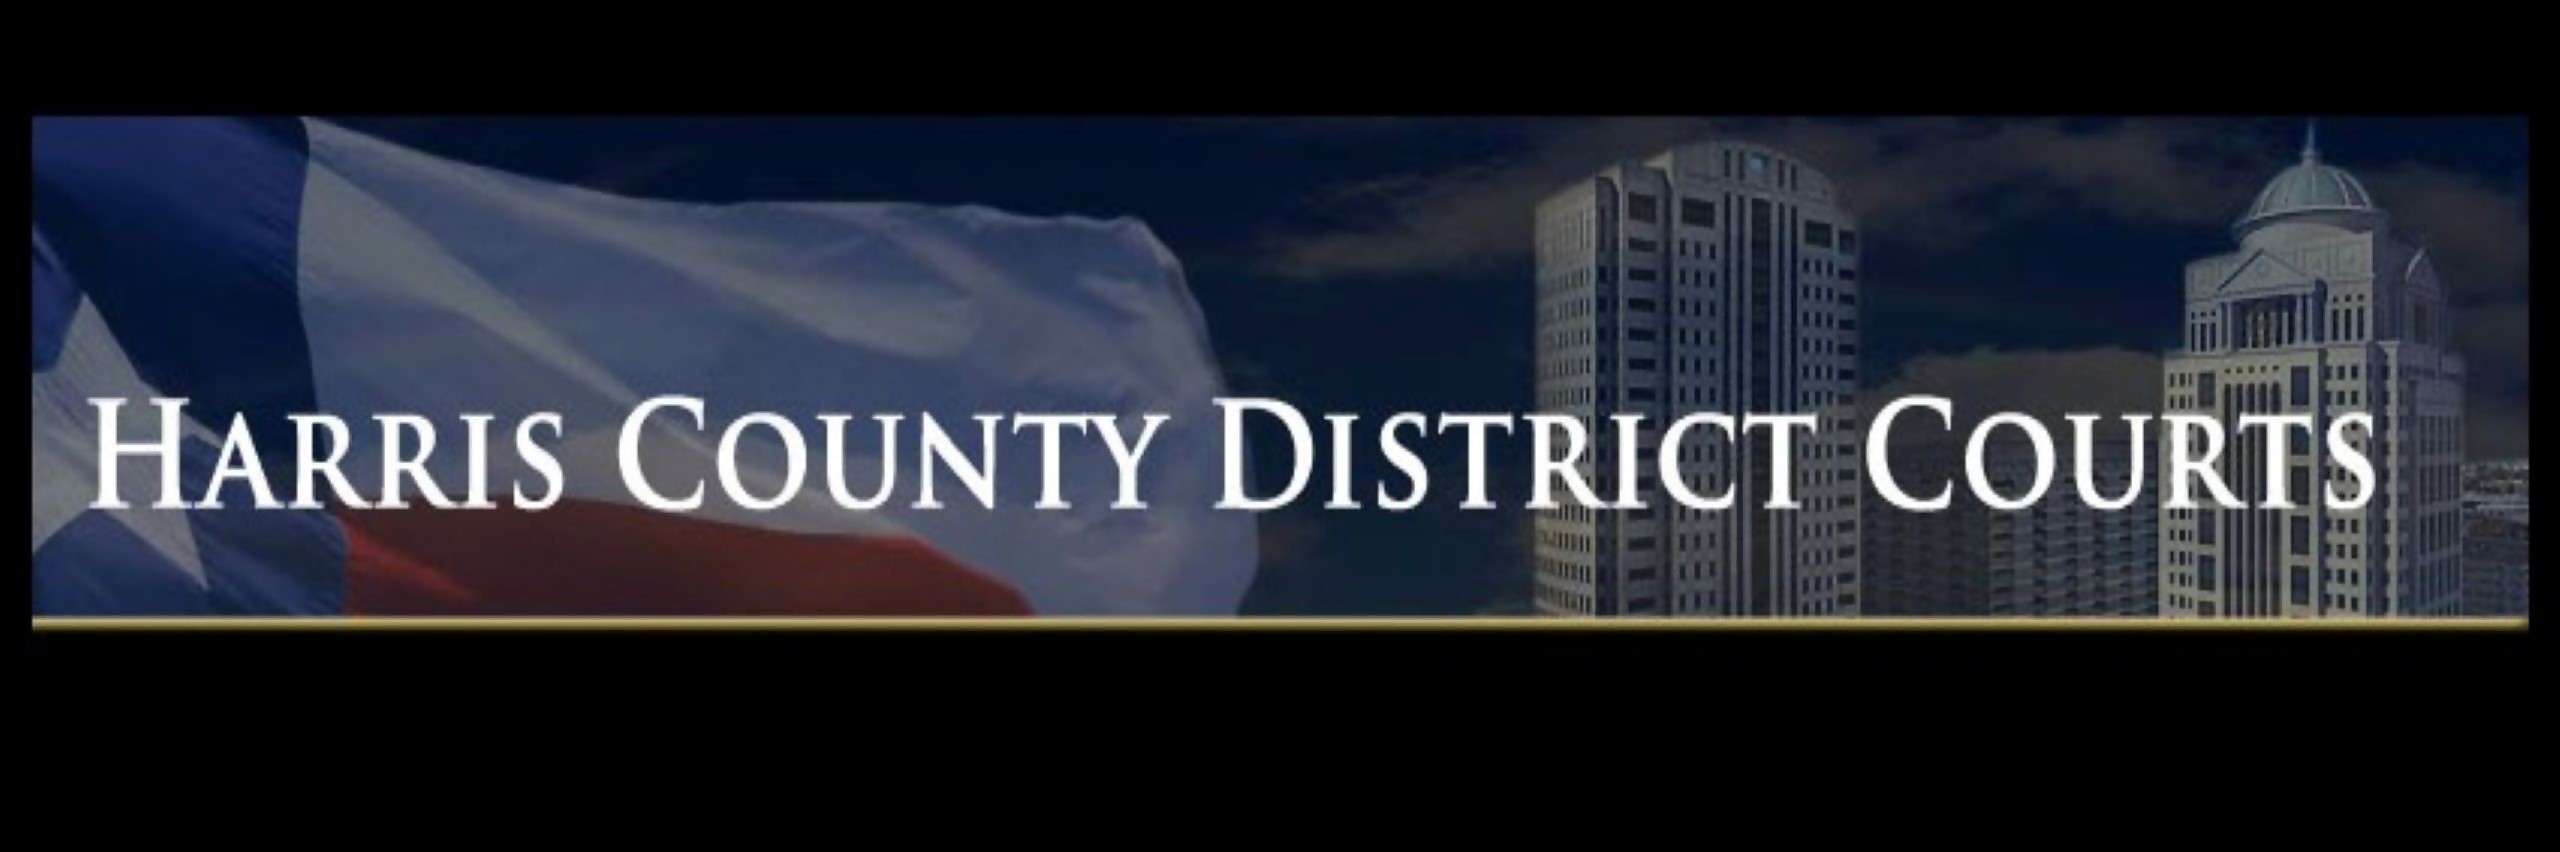 337th District Court - Live Stream